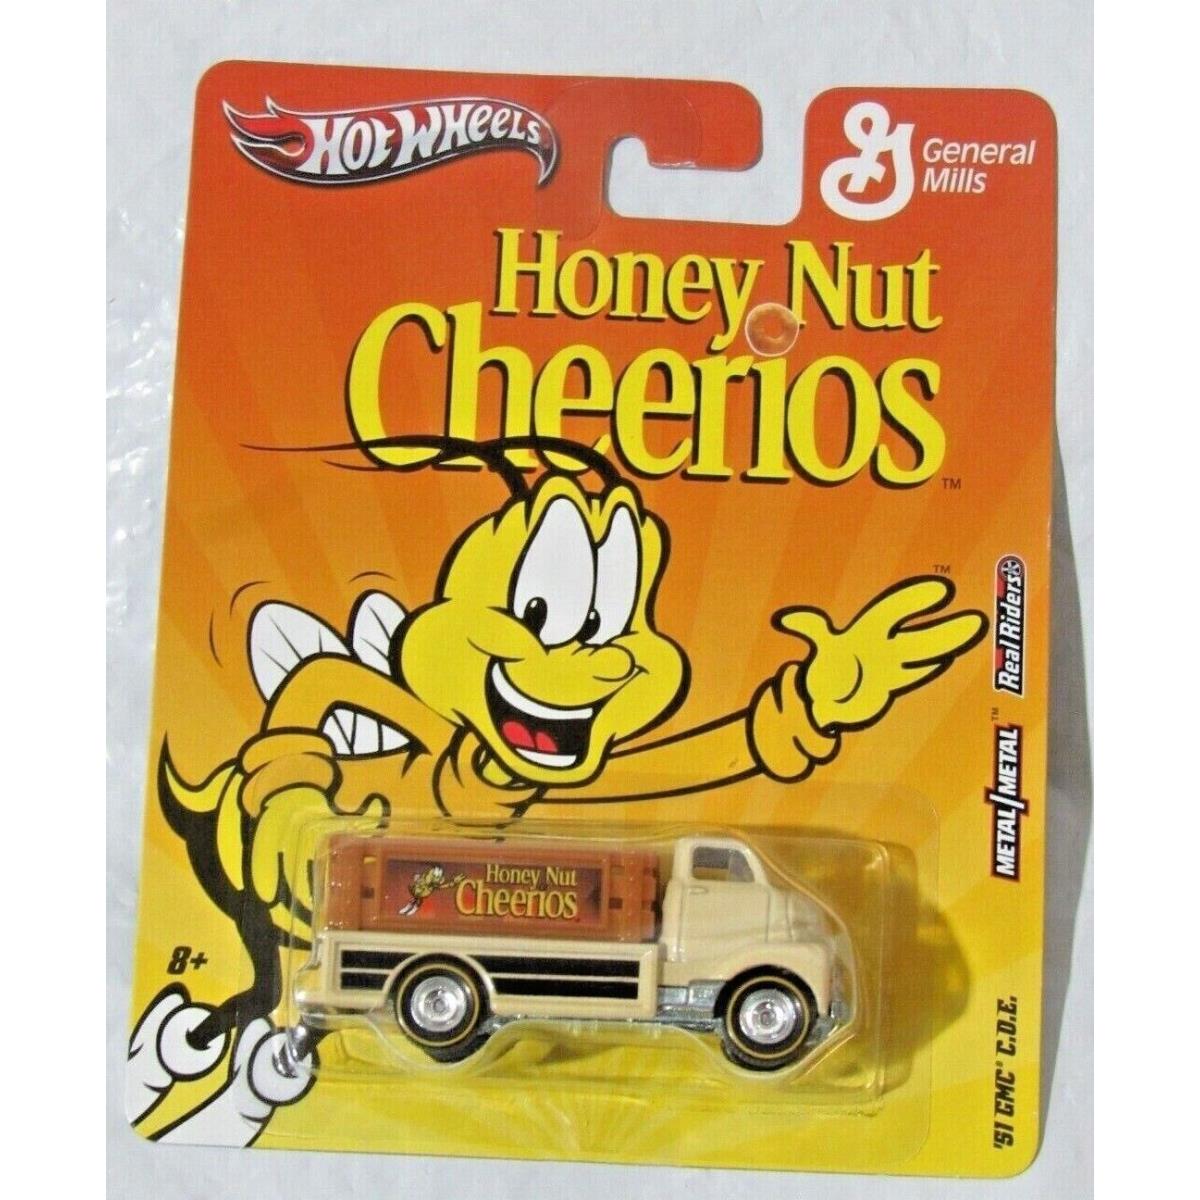 2011 Hot Wheels General Mills `51 Gmc Coe - Honey Nut Cheerios Make An Offer